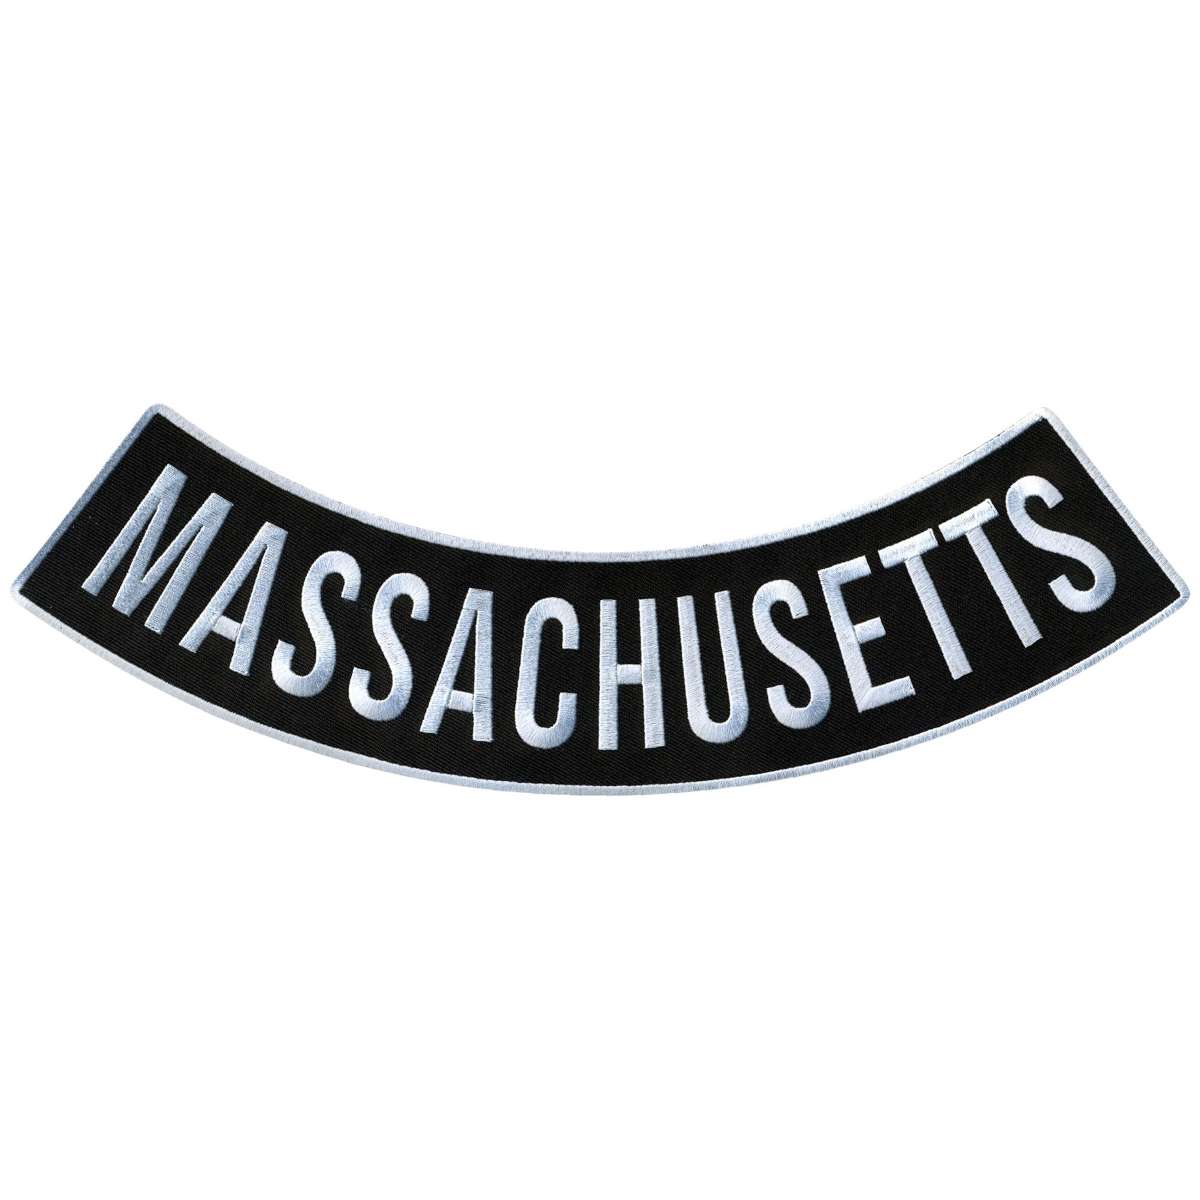 Hot Leathers Massachusetts 12” X 3” Bottom Rocker Patch PPM5041